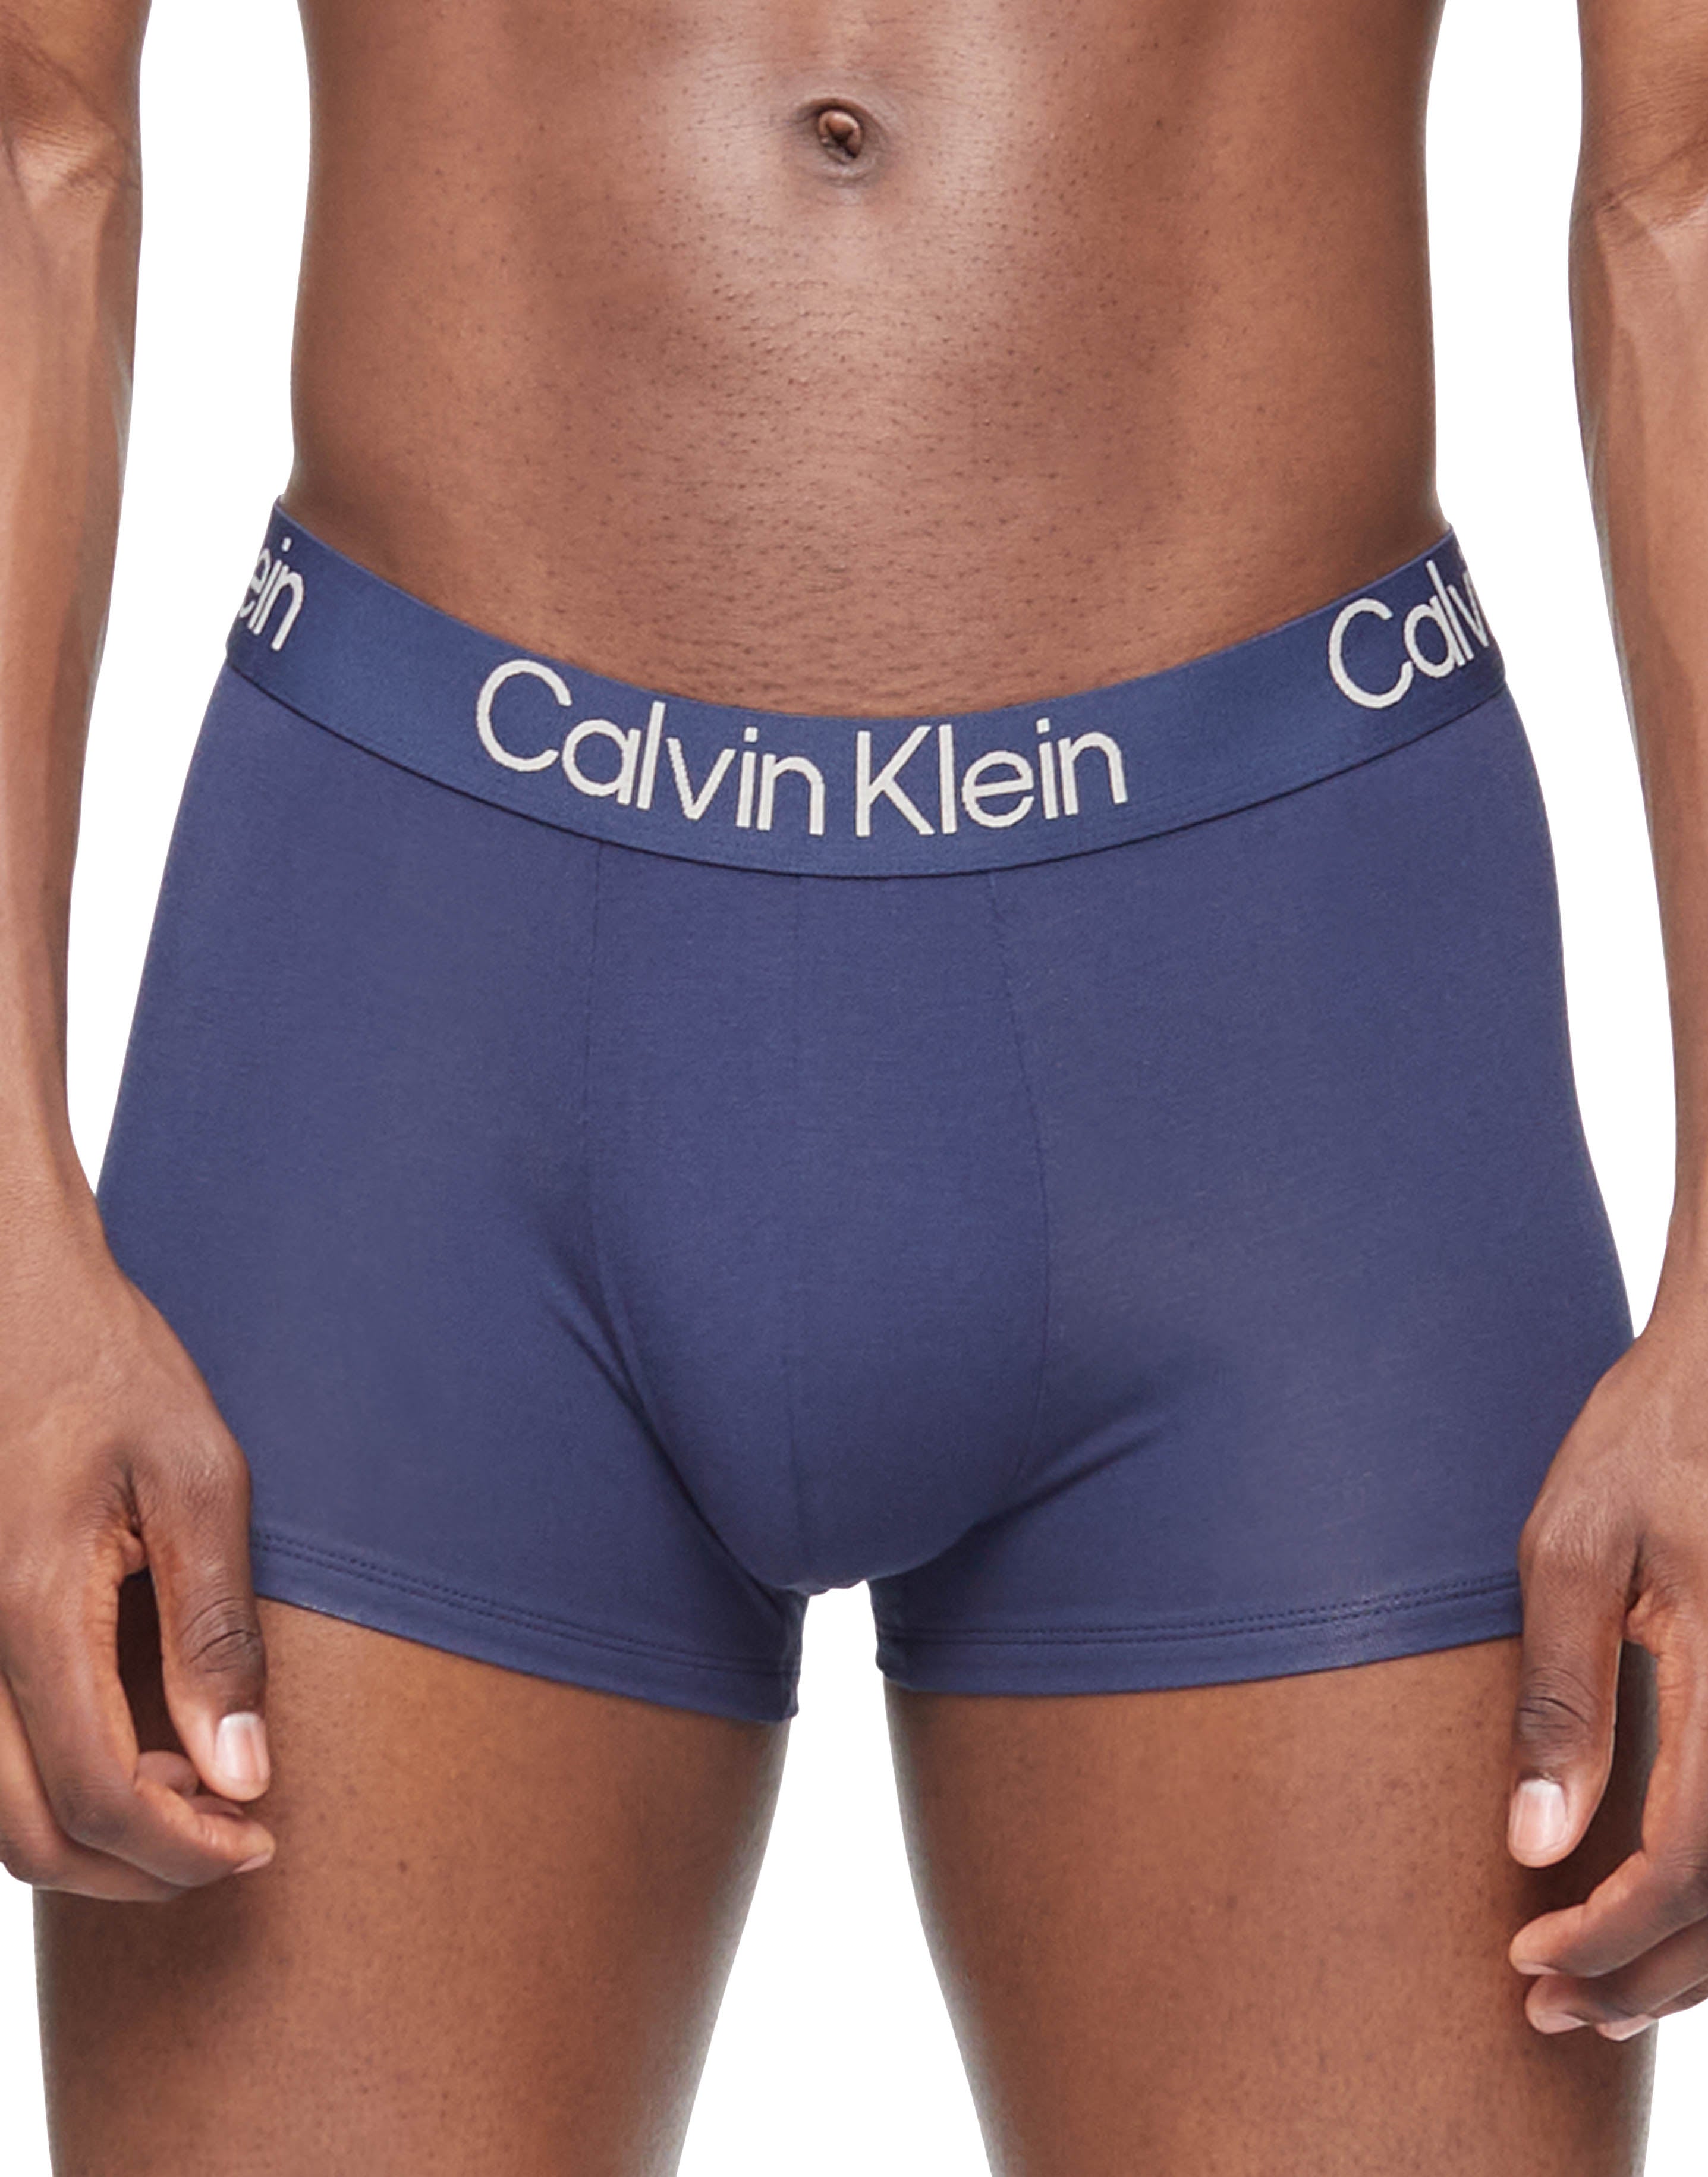  Calvin Klein Men's Body Modal Trunks, Black/Mink/Blue Shadow, S  : Clothing, Shoes & Jewelry